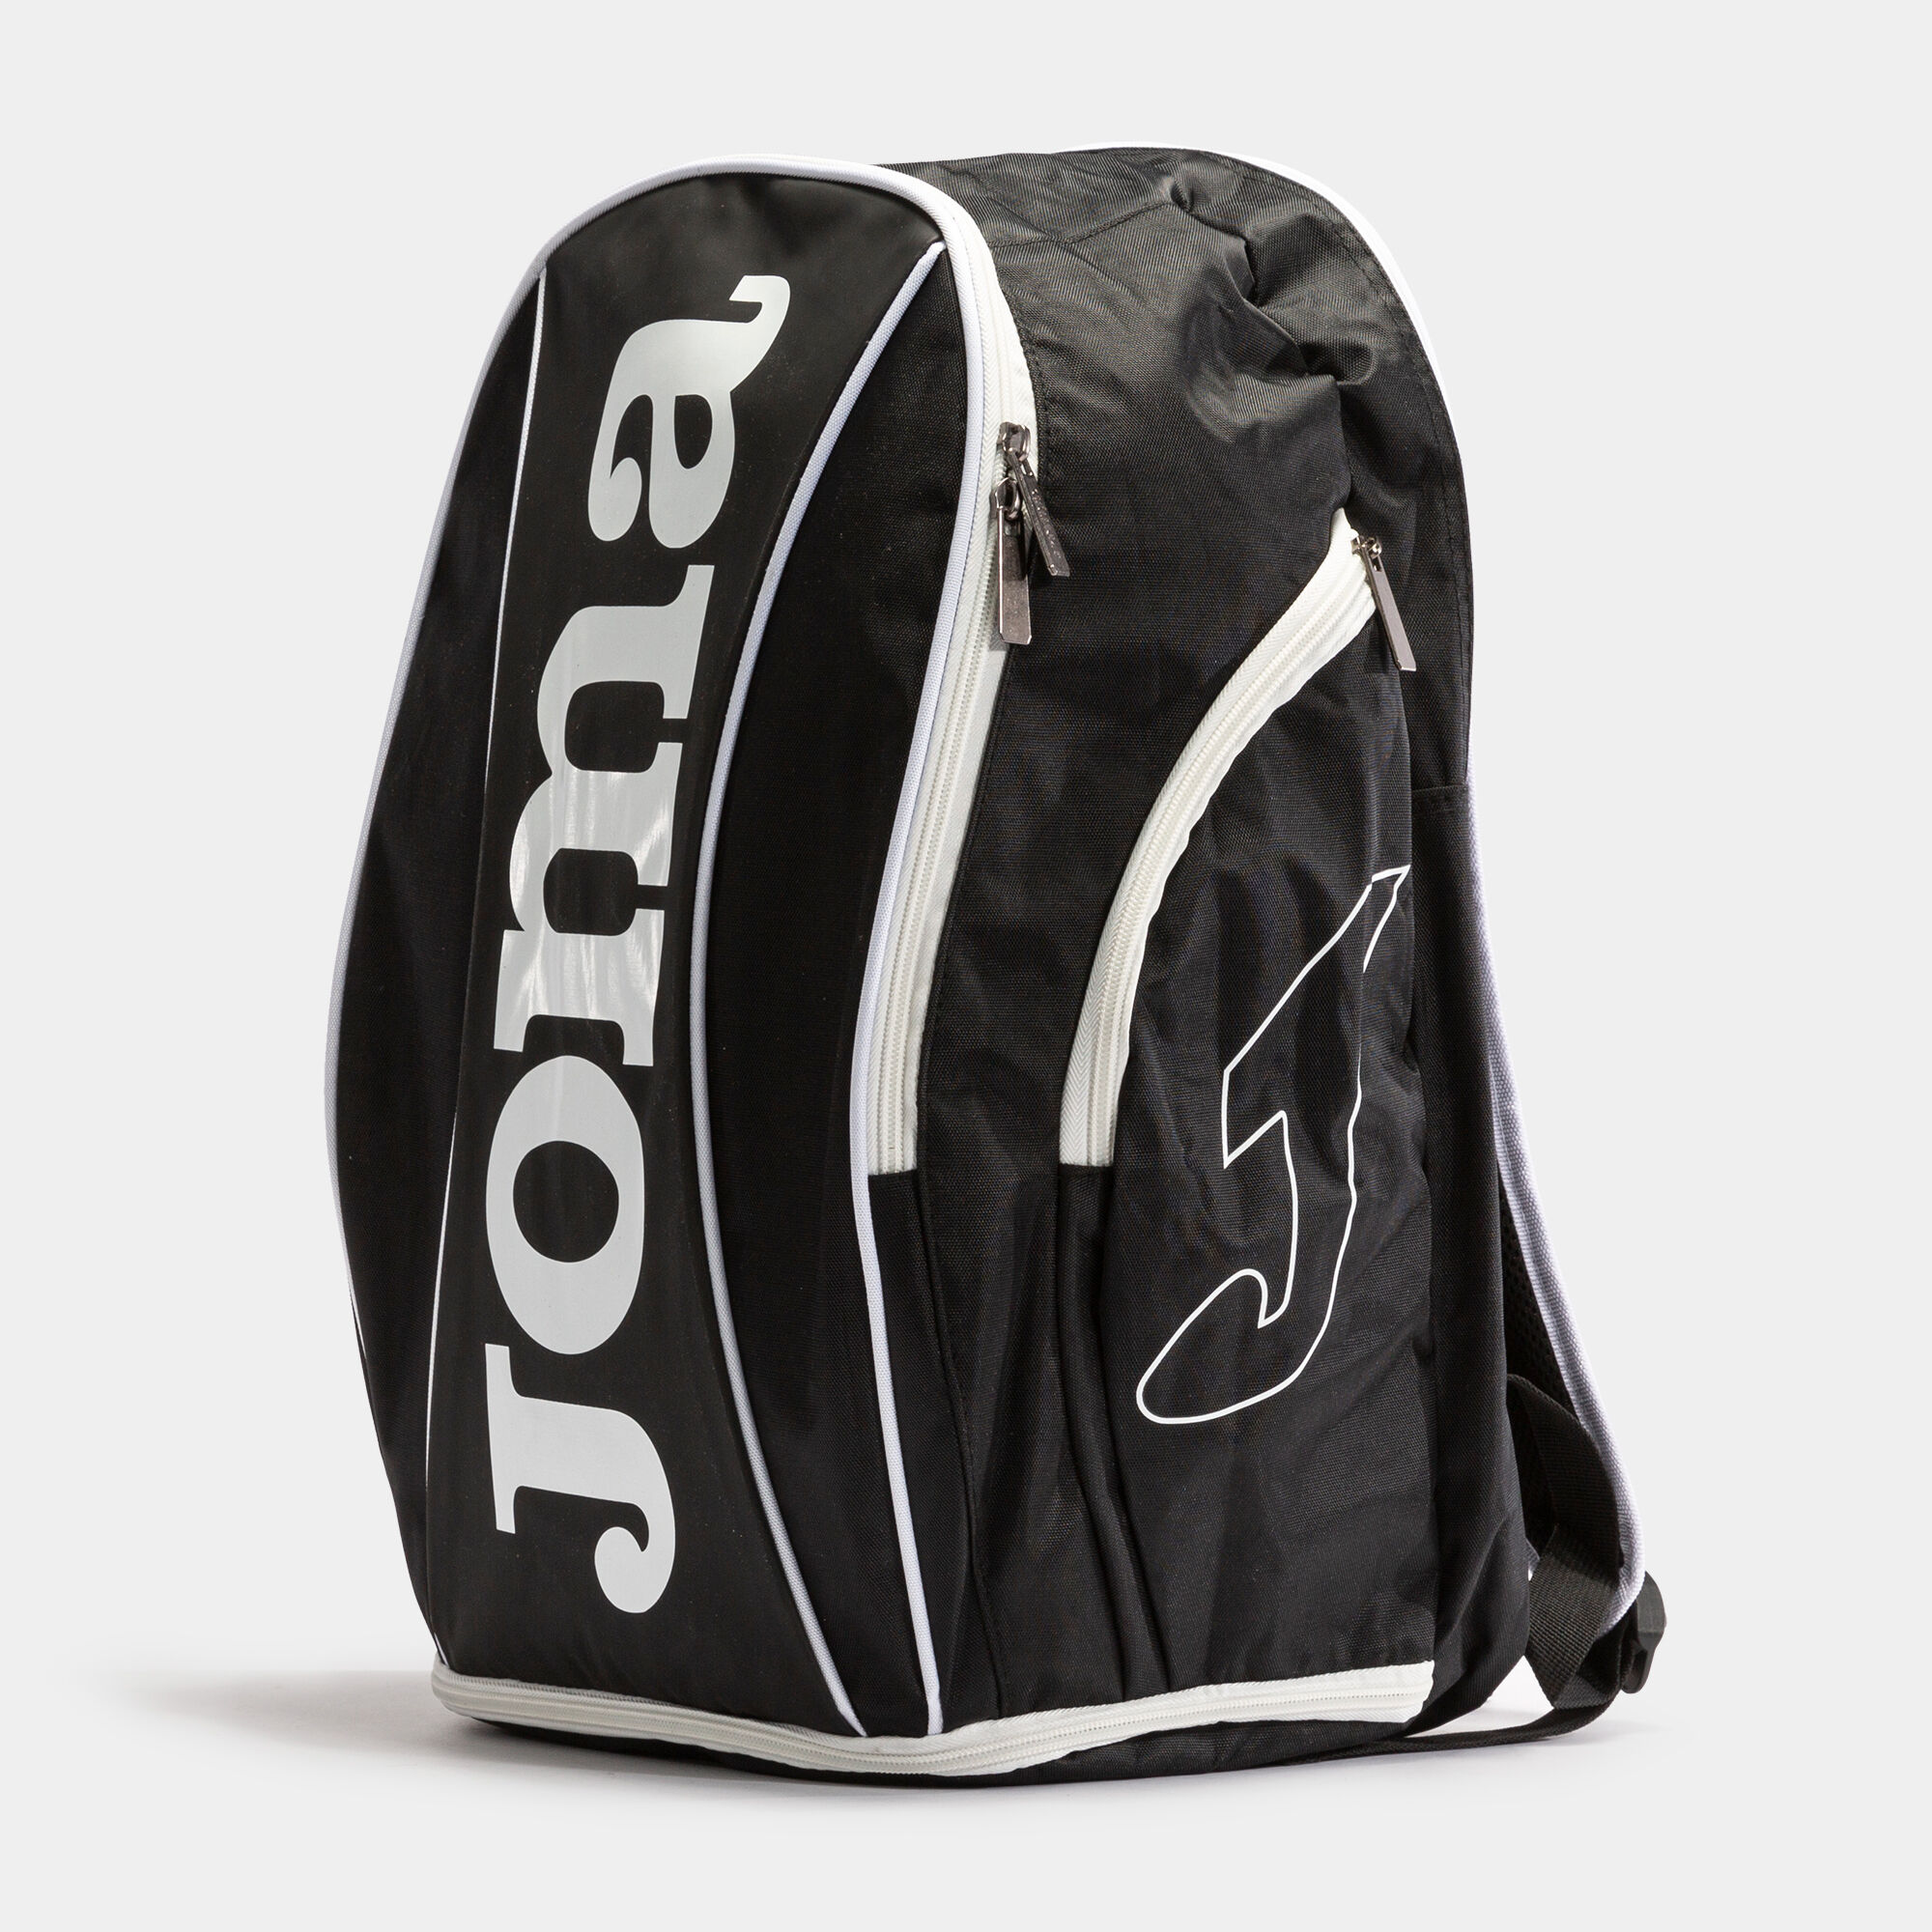 Backpack - shoe bag Open black white